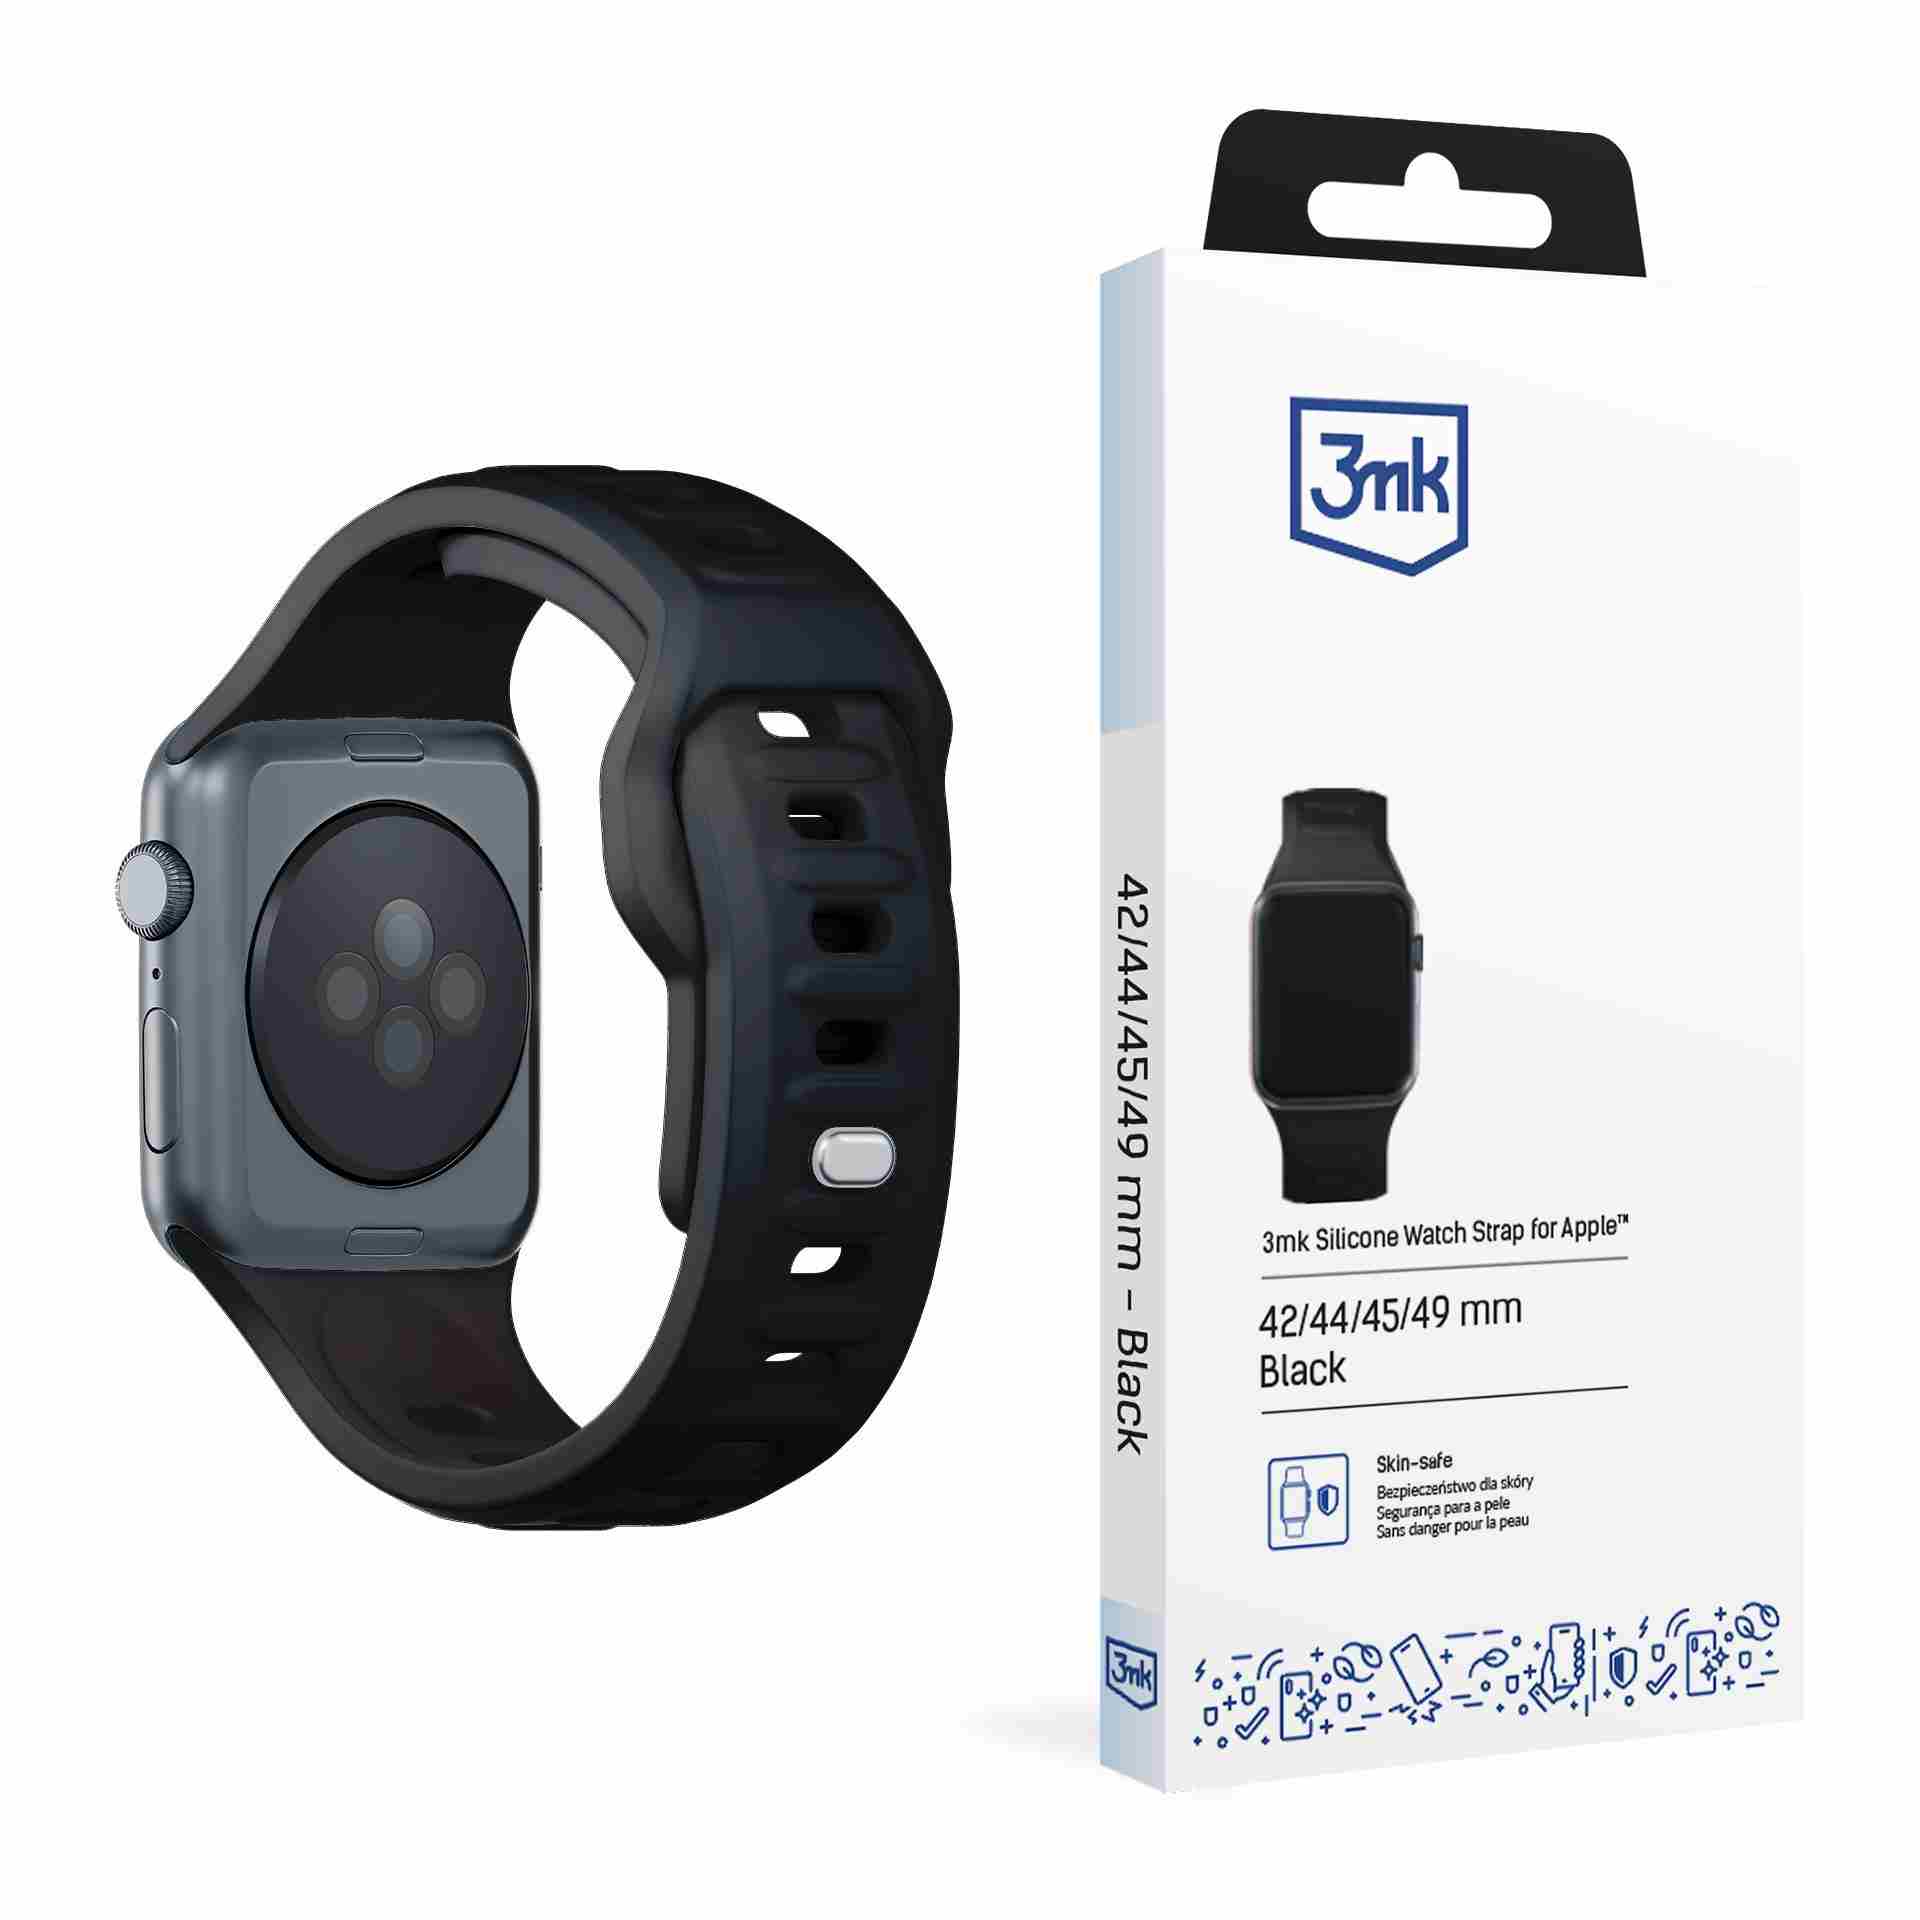 3mk Silicone Watch Strap pro Apple 42 44 45 49 mm Black0 